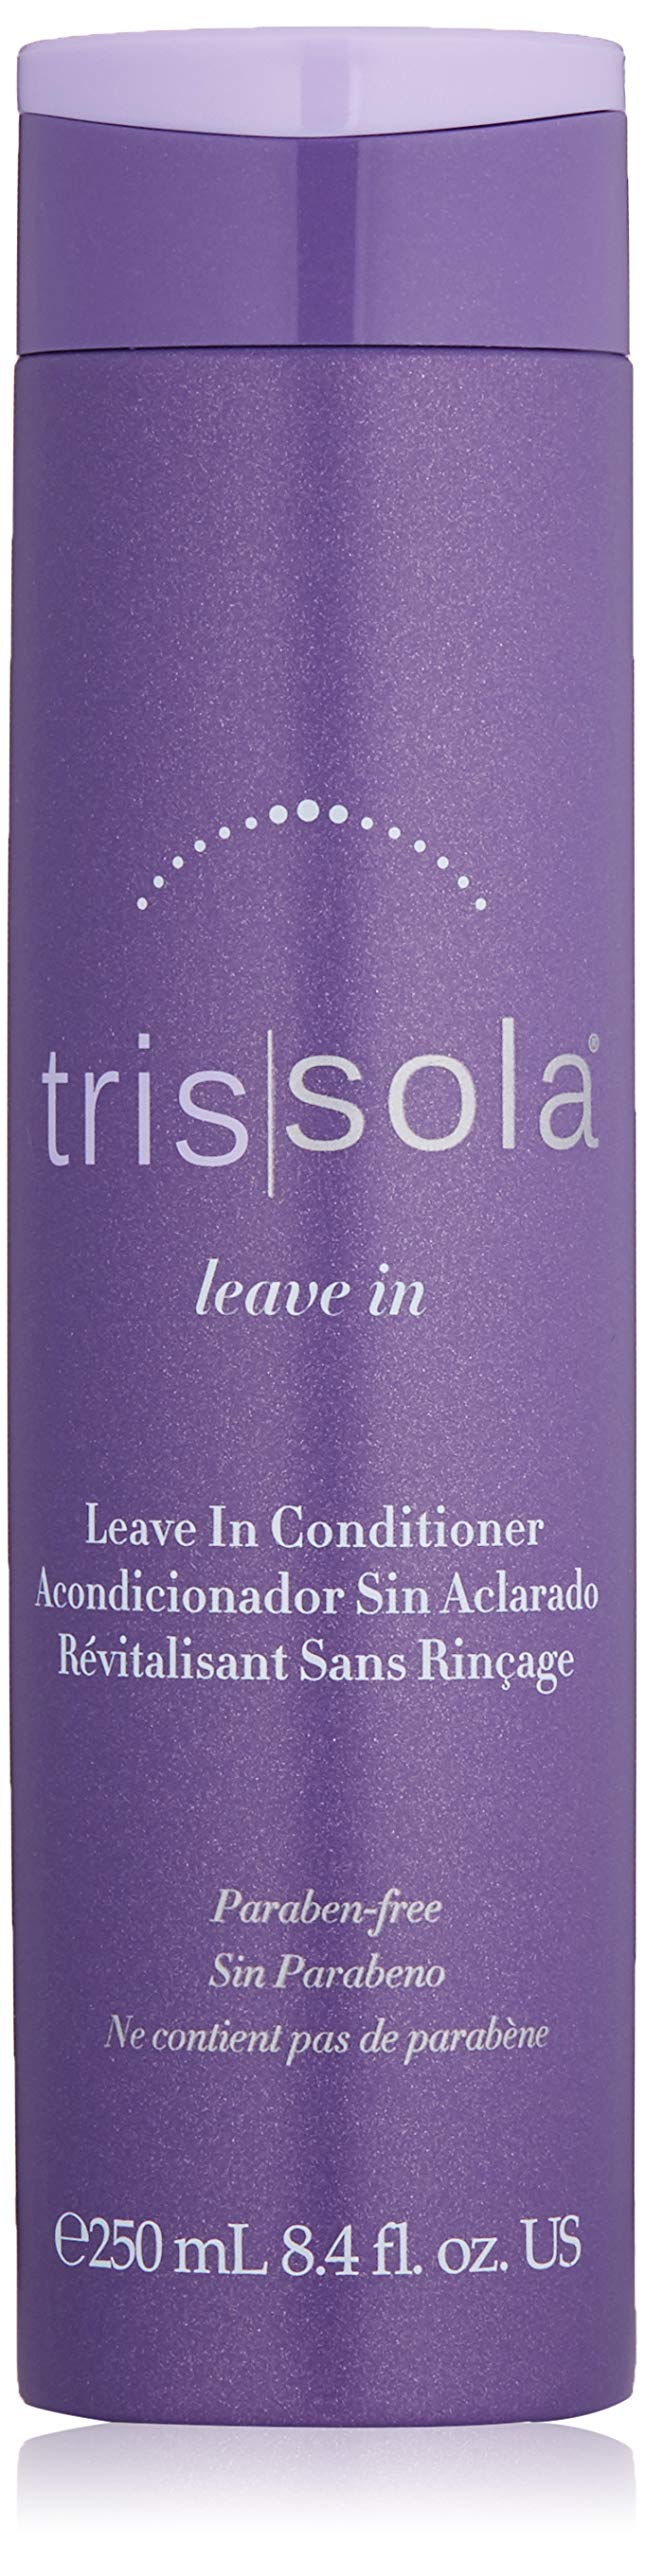 Trissola Hydrate Leave In Conditioner, 8.4 Fl Oz